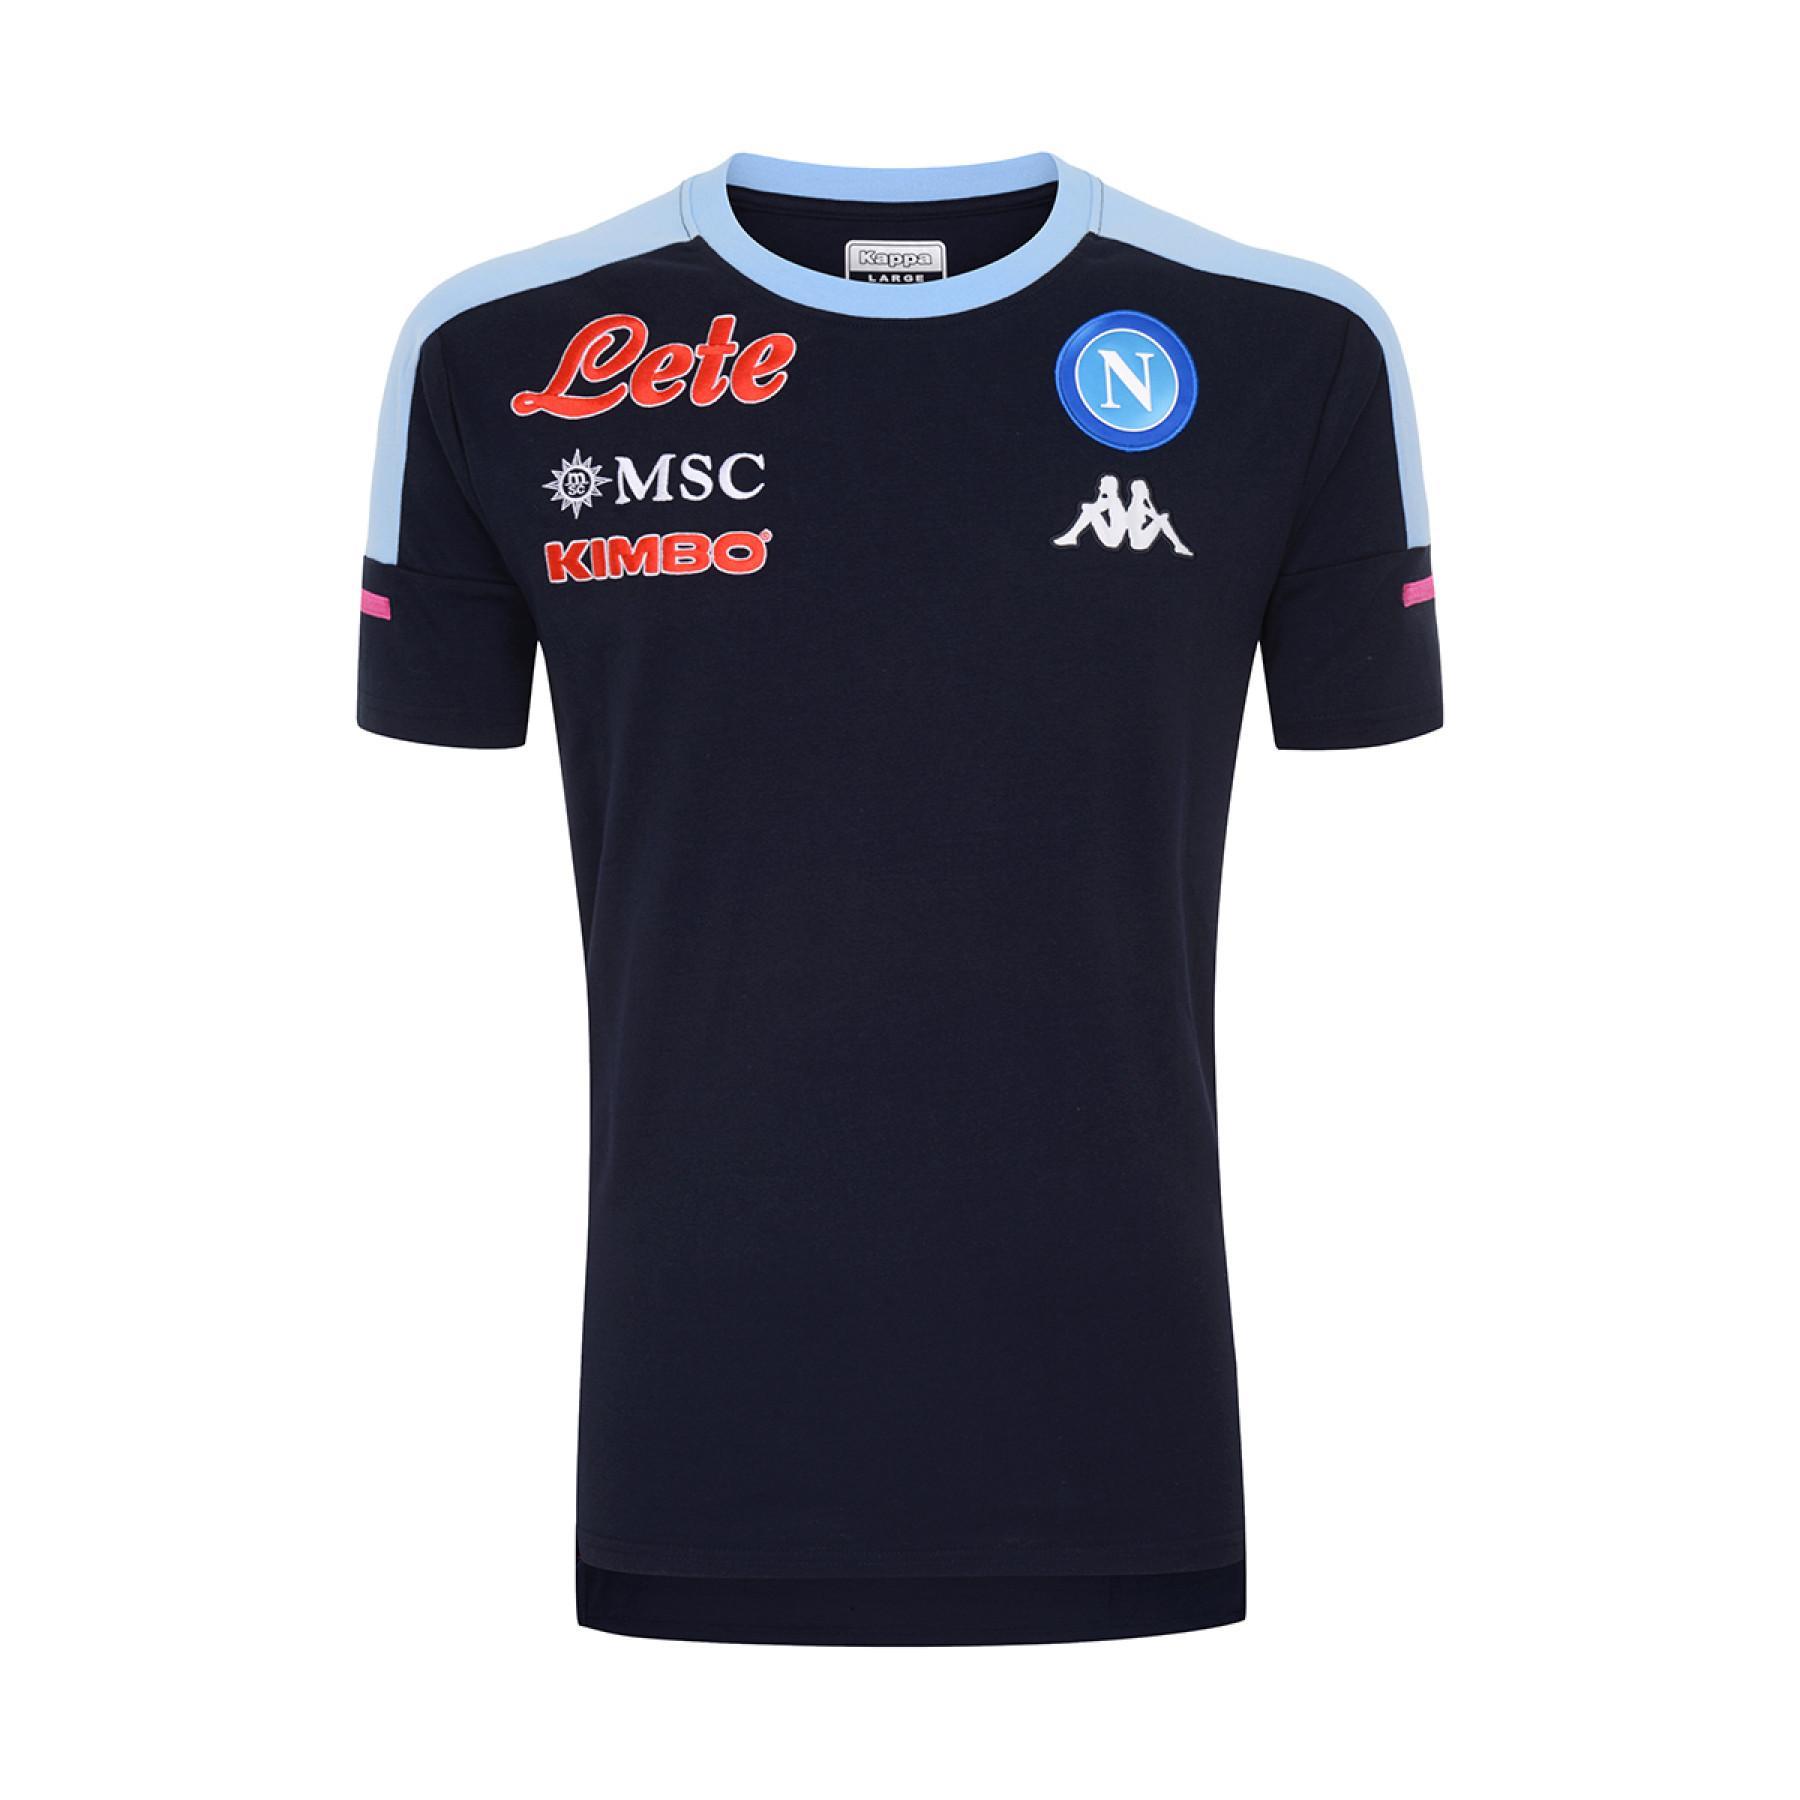 T-shirt SSC Napoli 2020/21 ayba 4